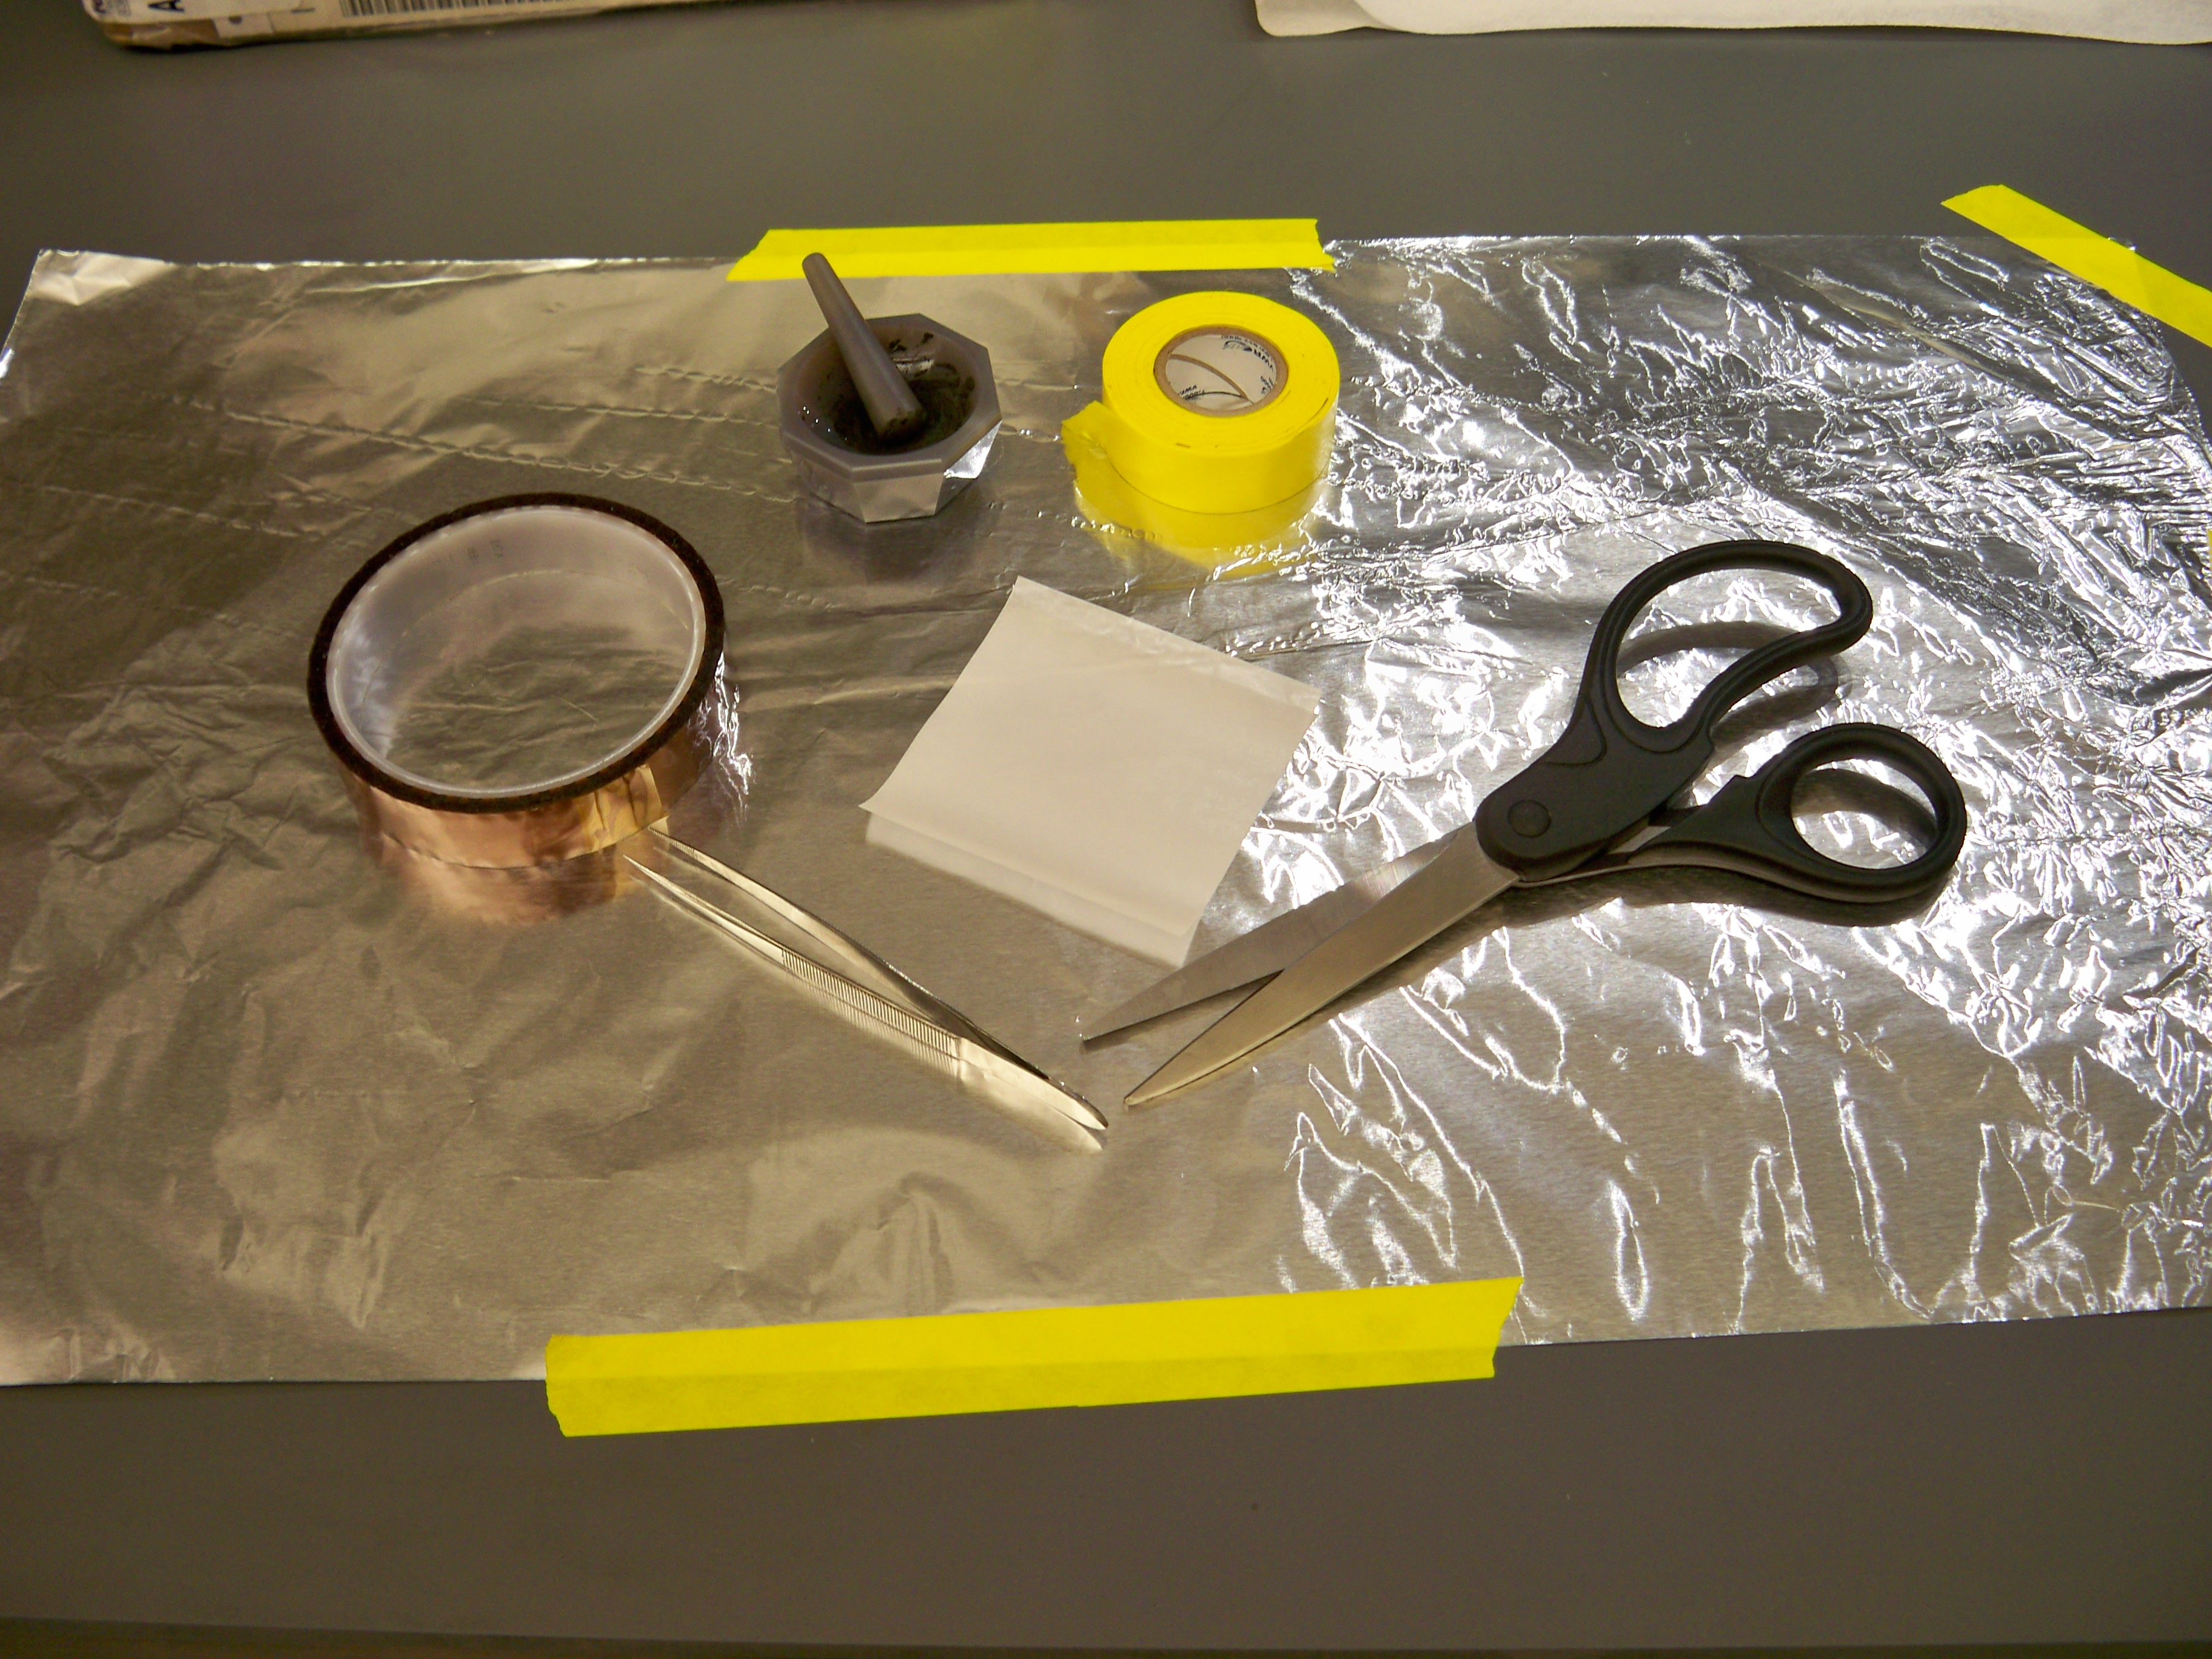 Several utensils are needed for the sample preparation using Method 2